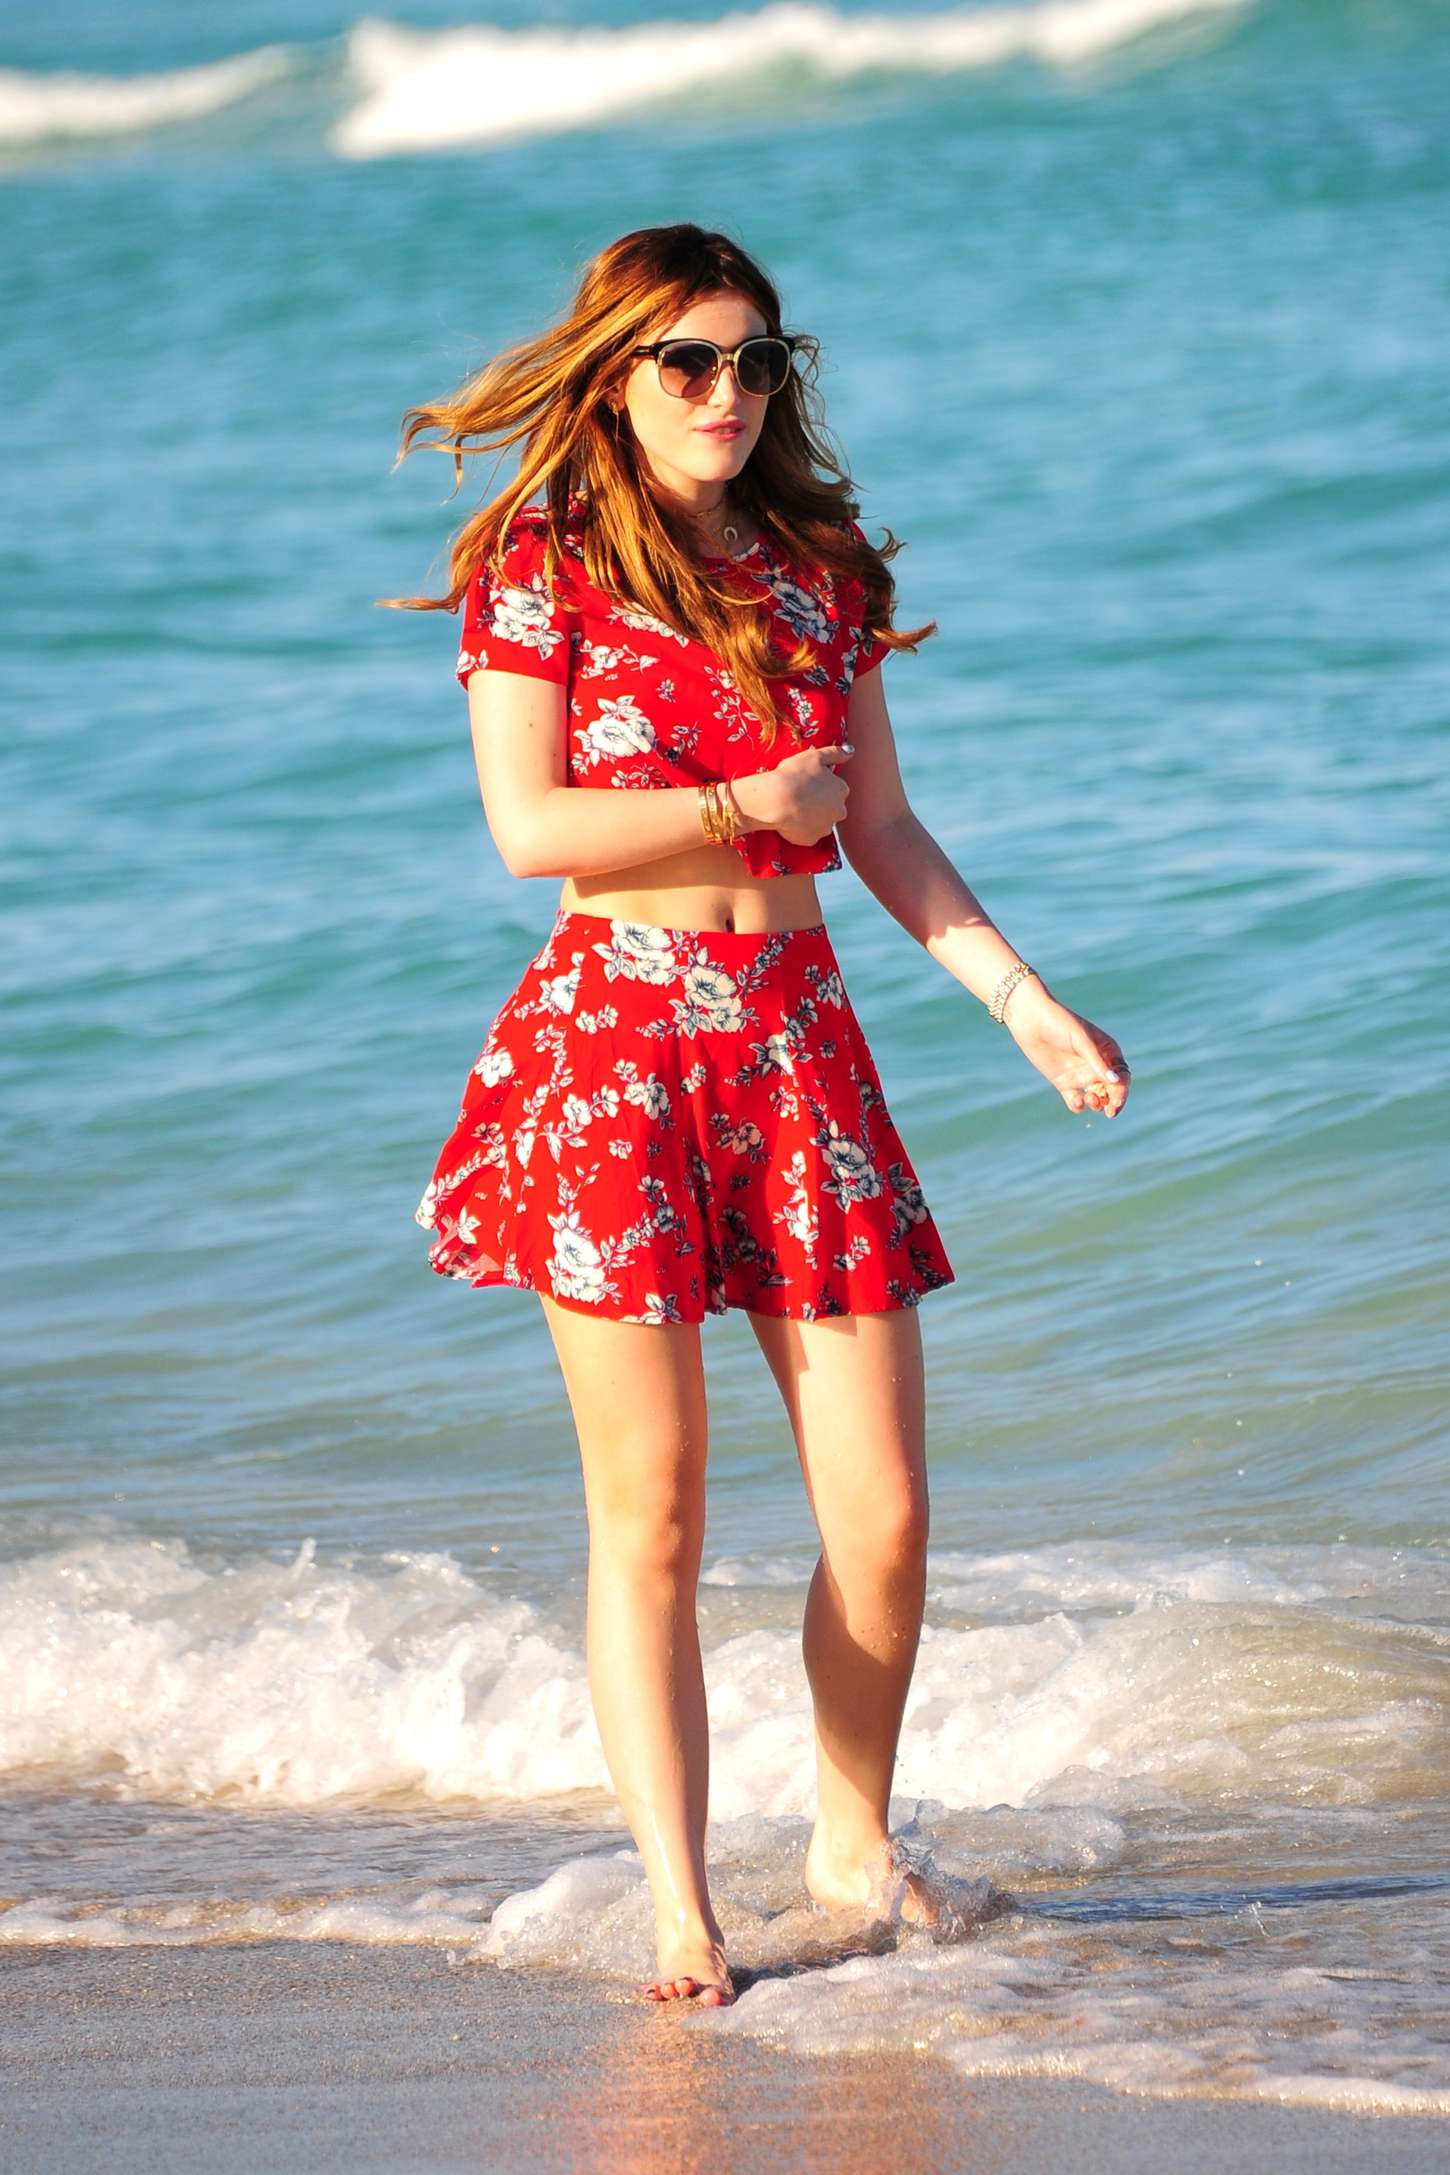 Bella and Dani Thorne at a beach in Miami